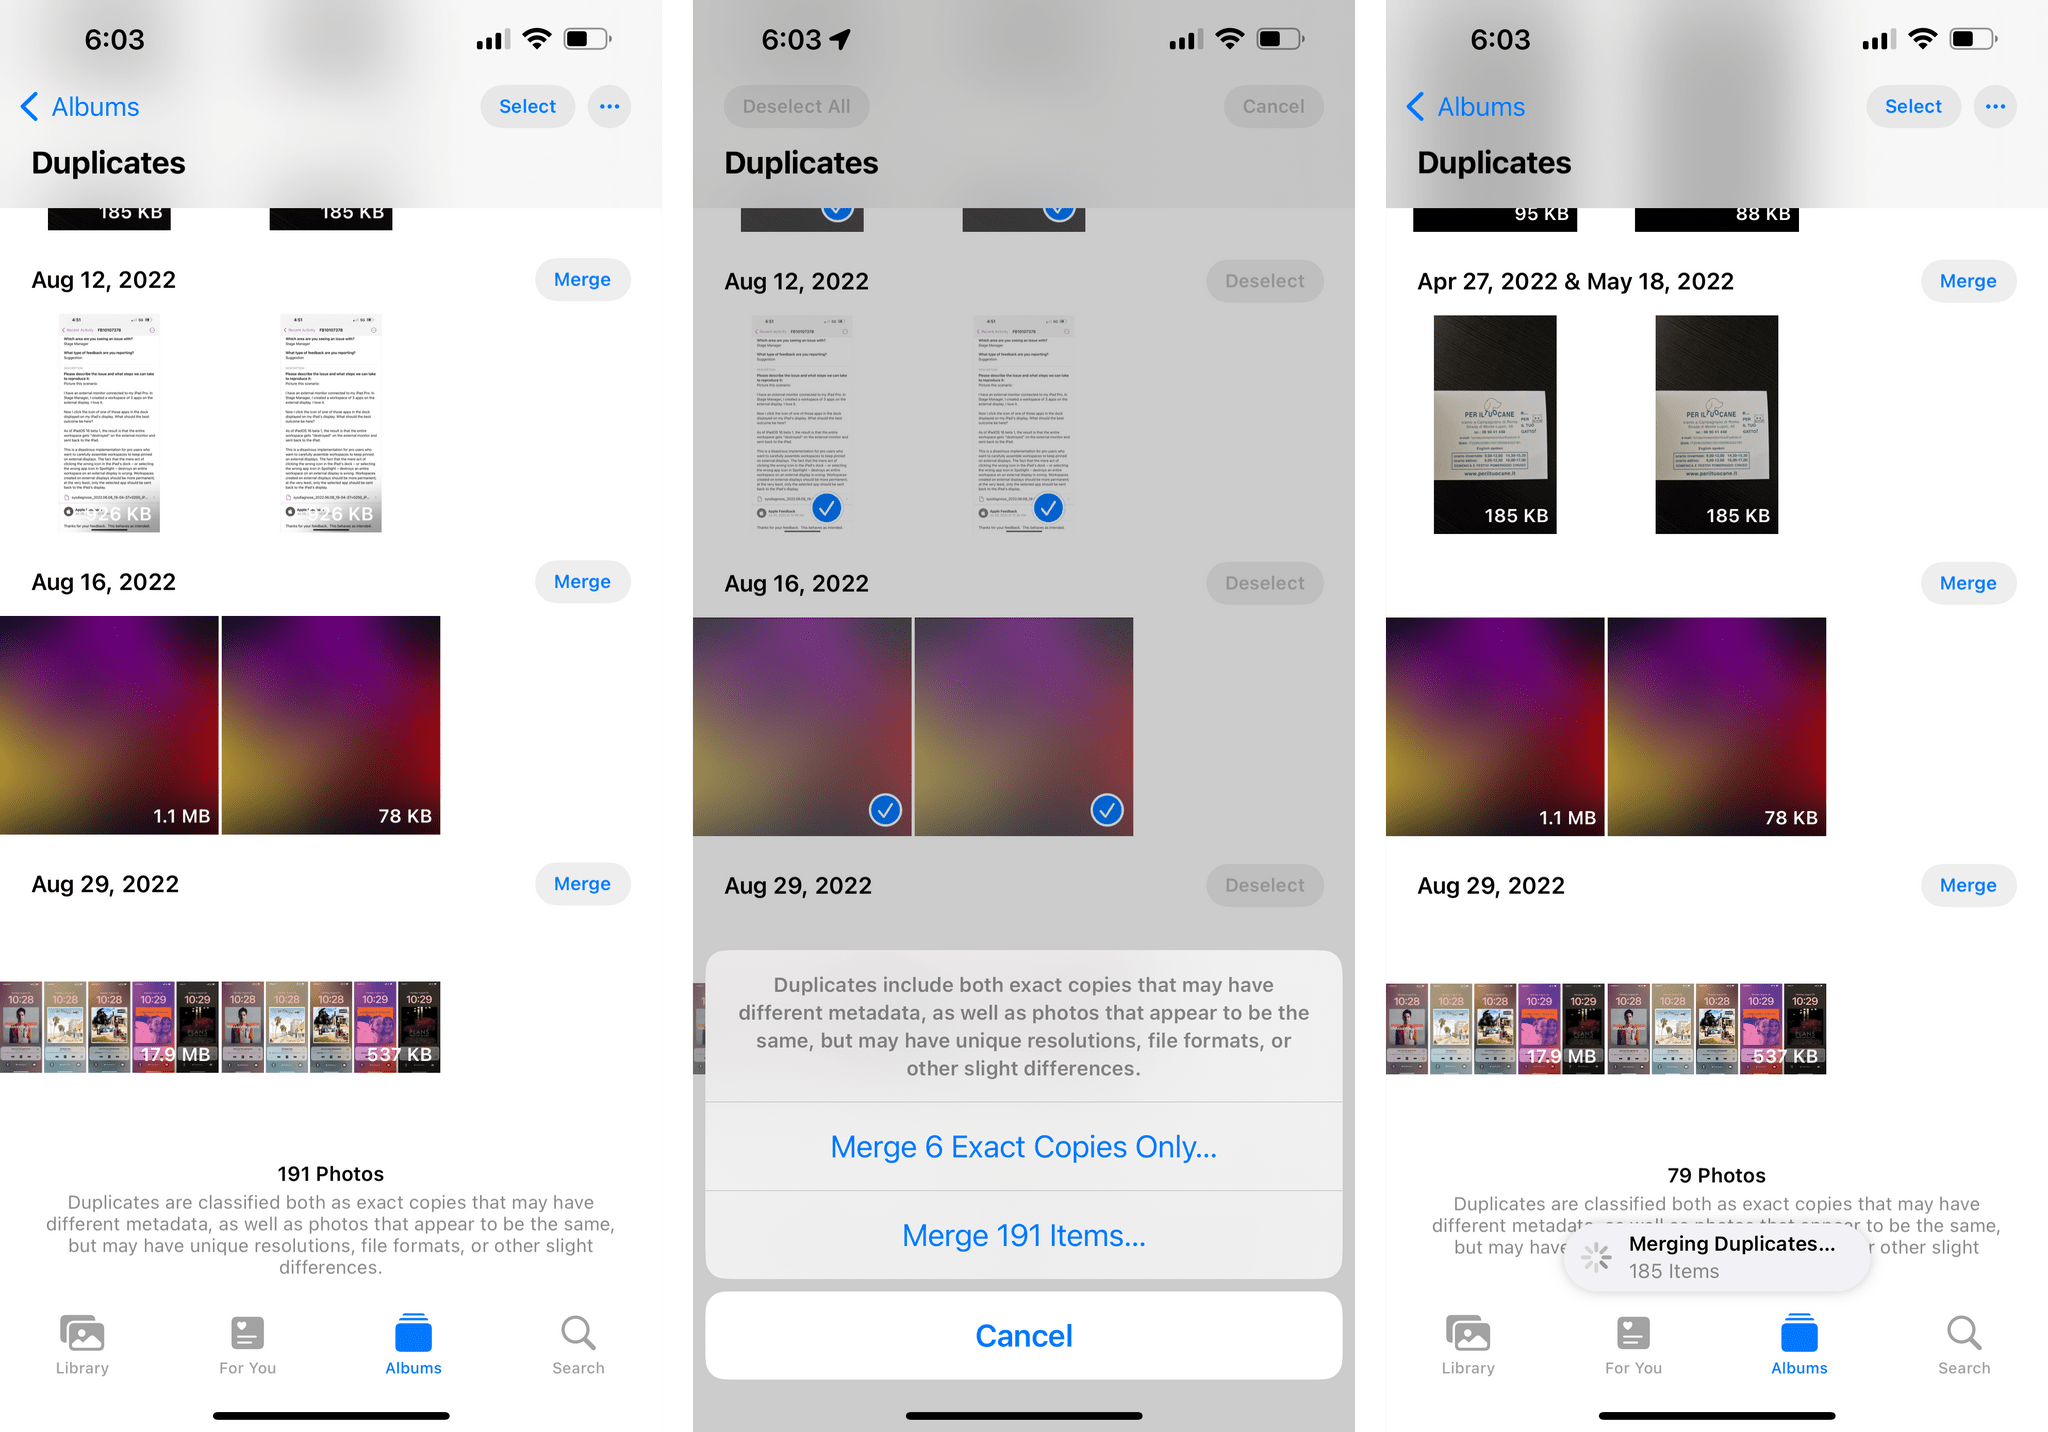 Merging duplicates in the Photos app.